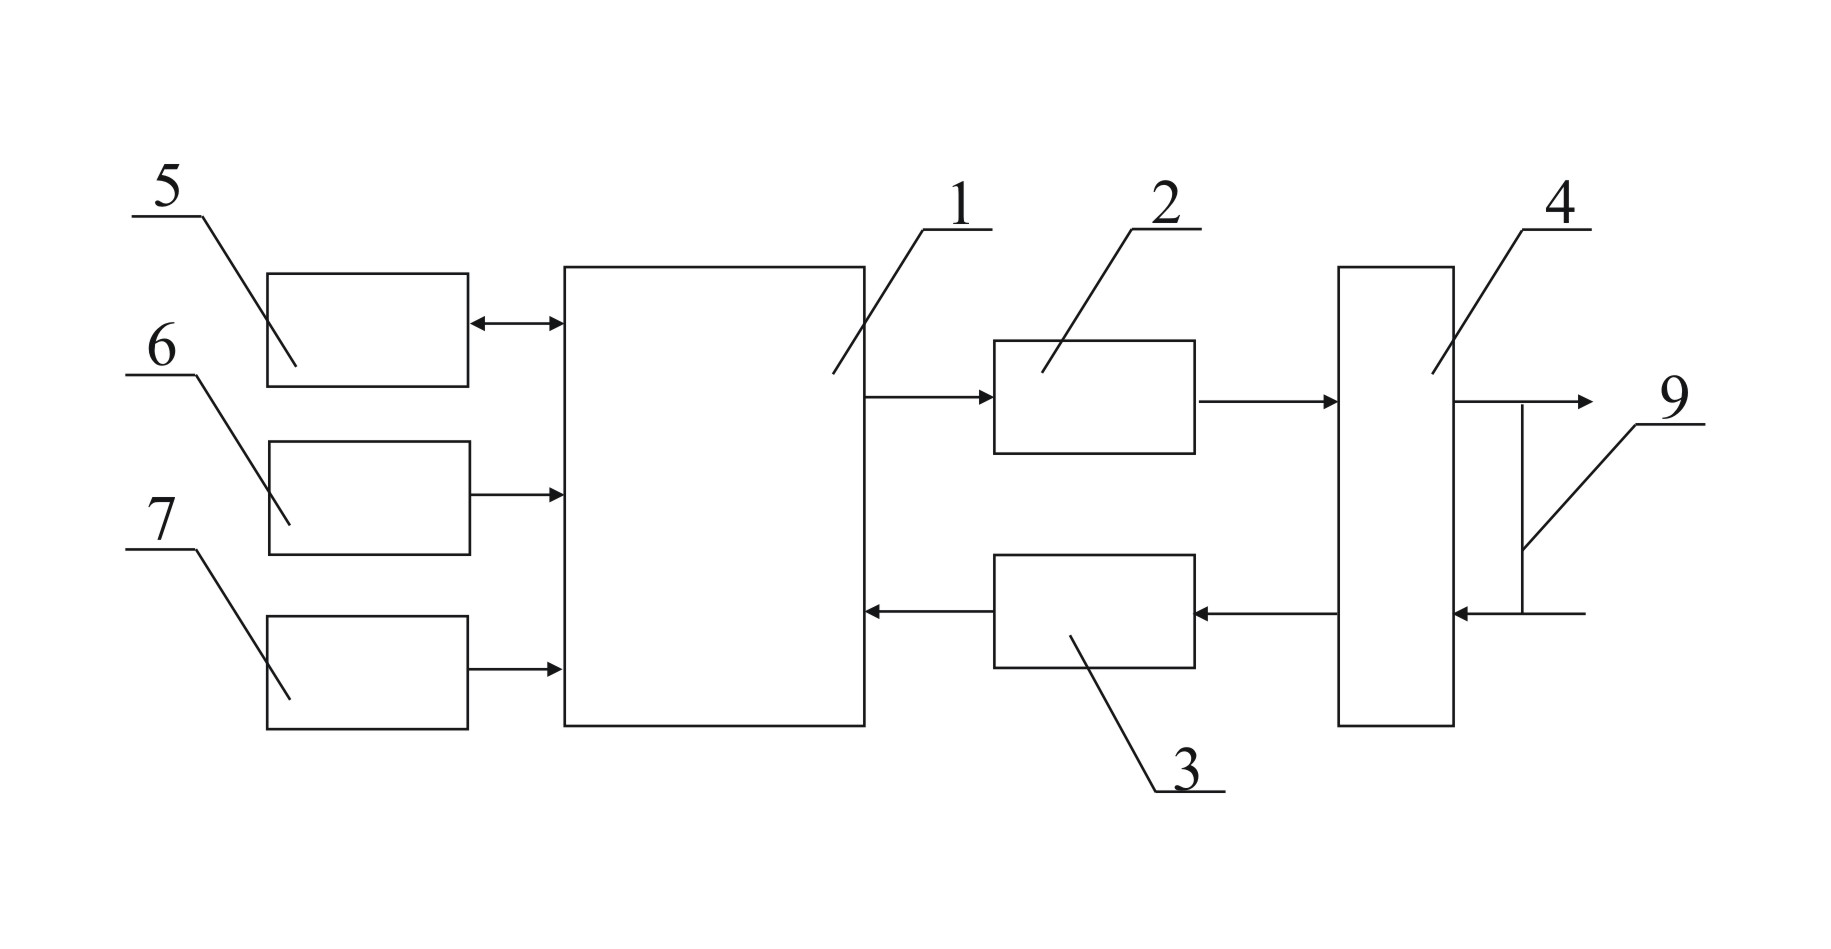 SDLC (System Development Life Cycle) protocol bus communication testing device based on FPGA (Field-Programmable Gate Array)